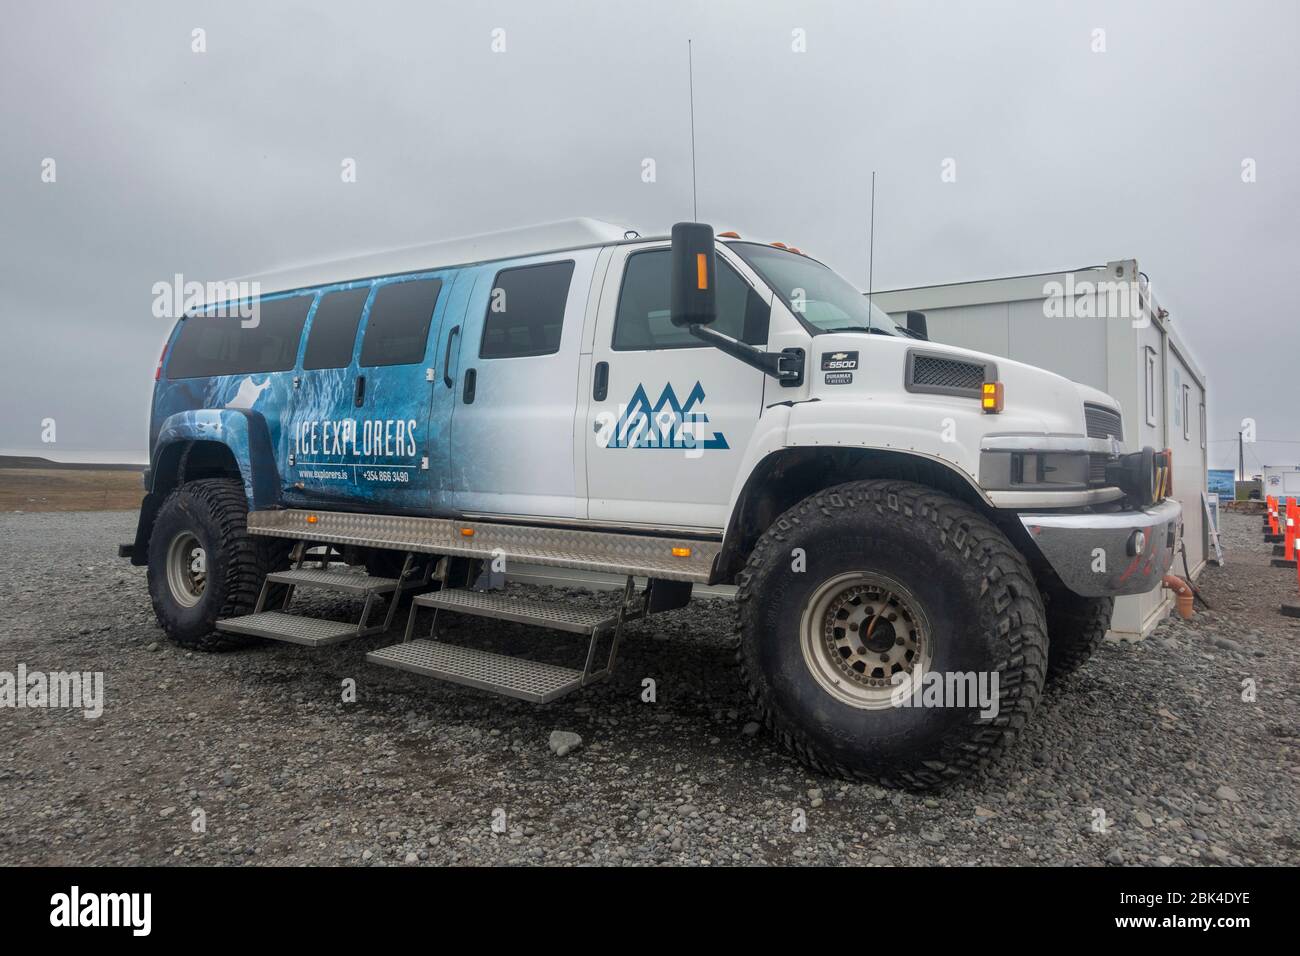 A massive Ice Explorers special Build Chevrolet Kodiak (C5500) vehicle in Iceland. Stock Photo